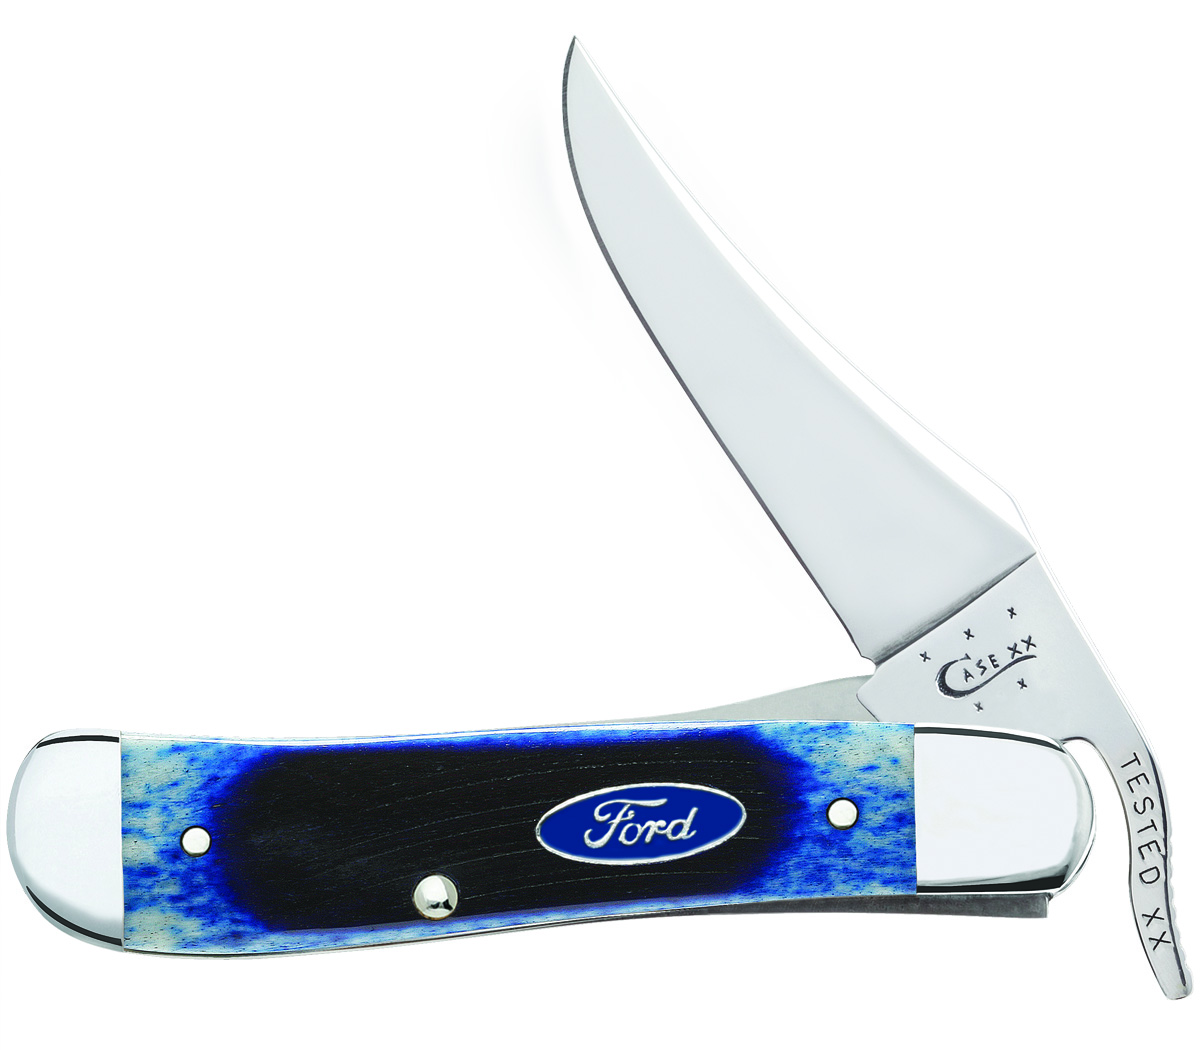 Ford knife knives #6